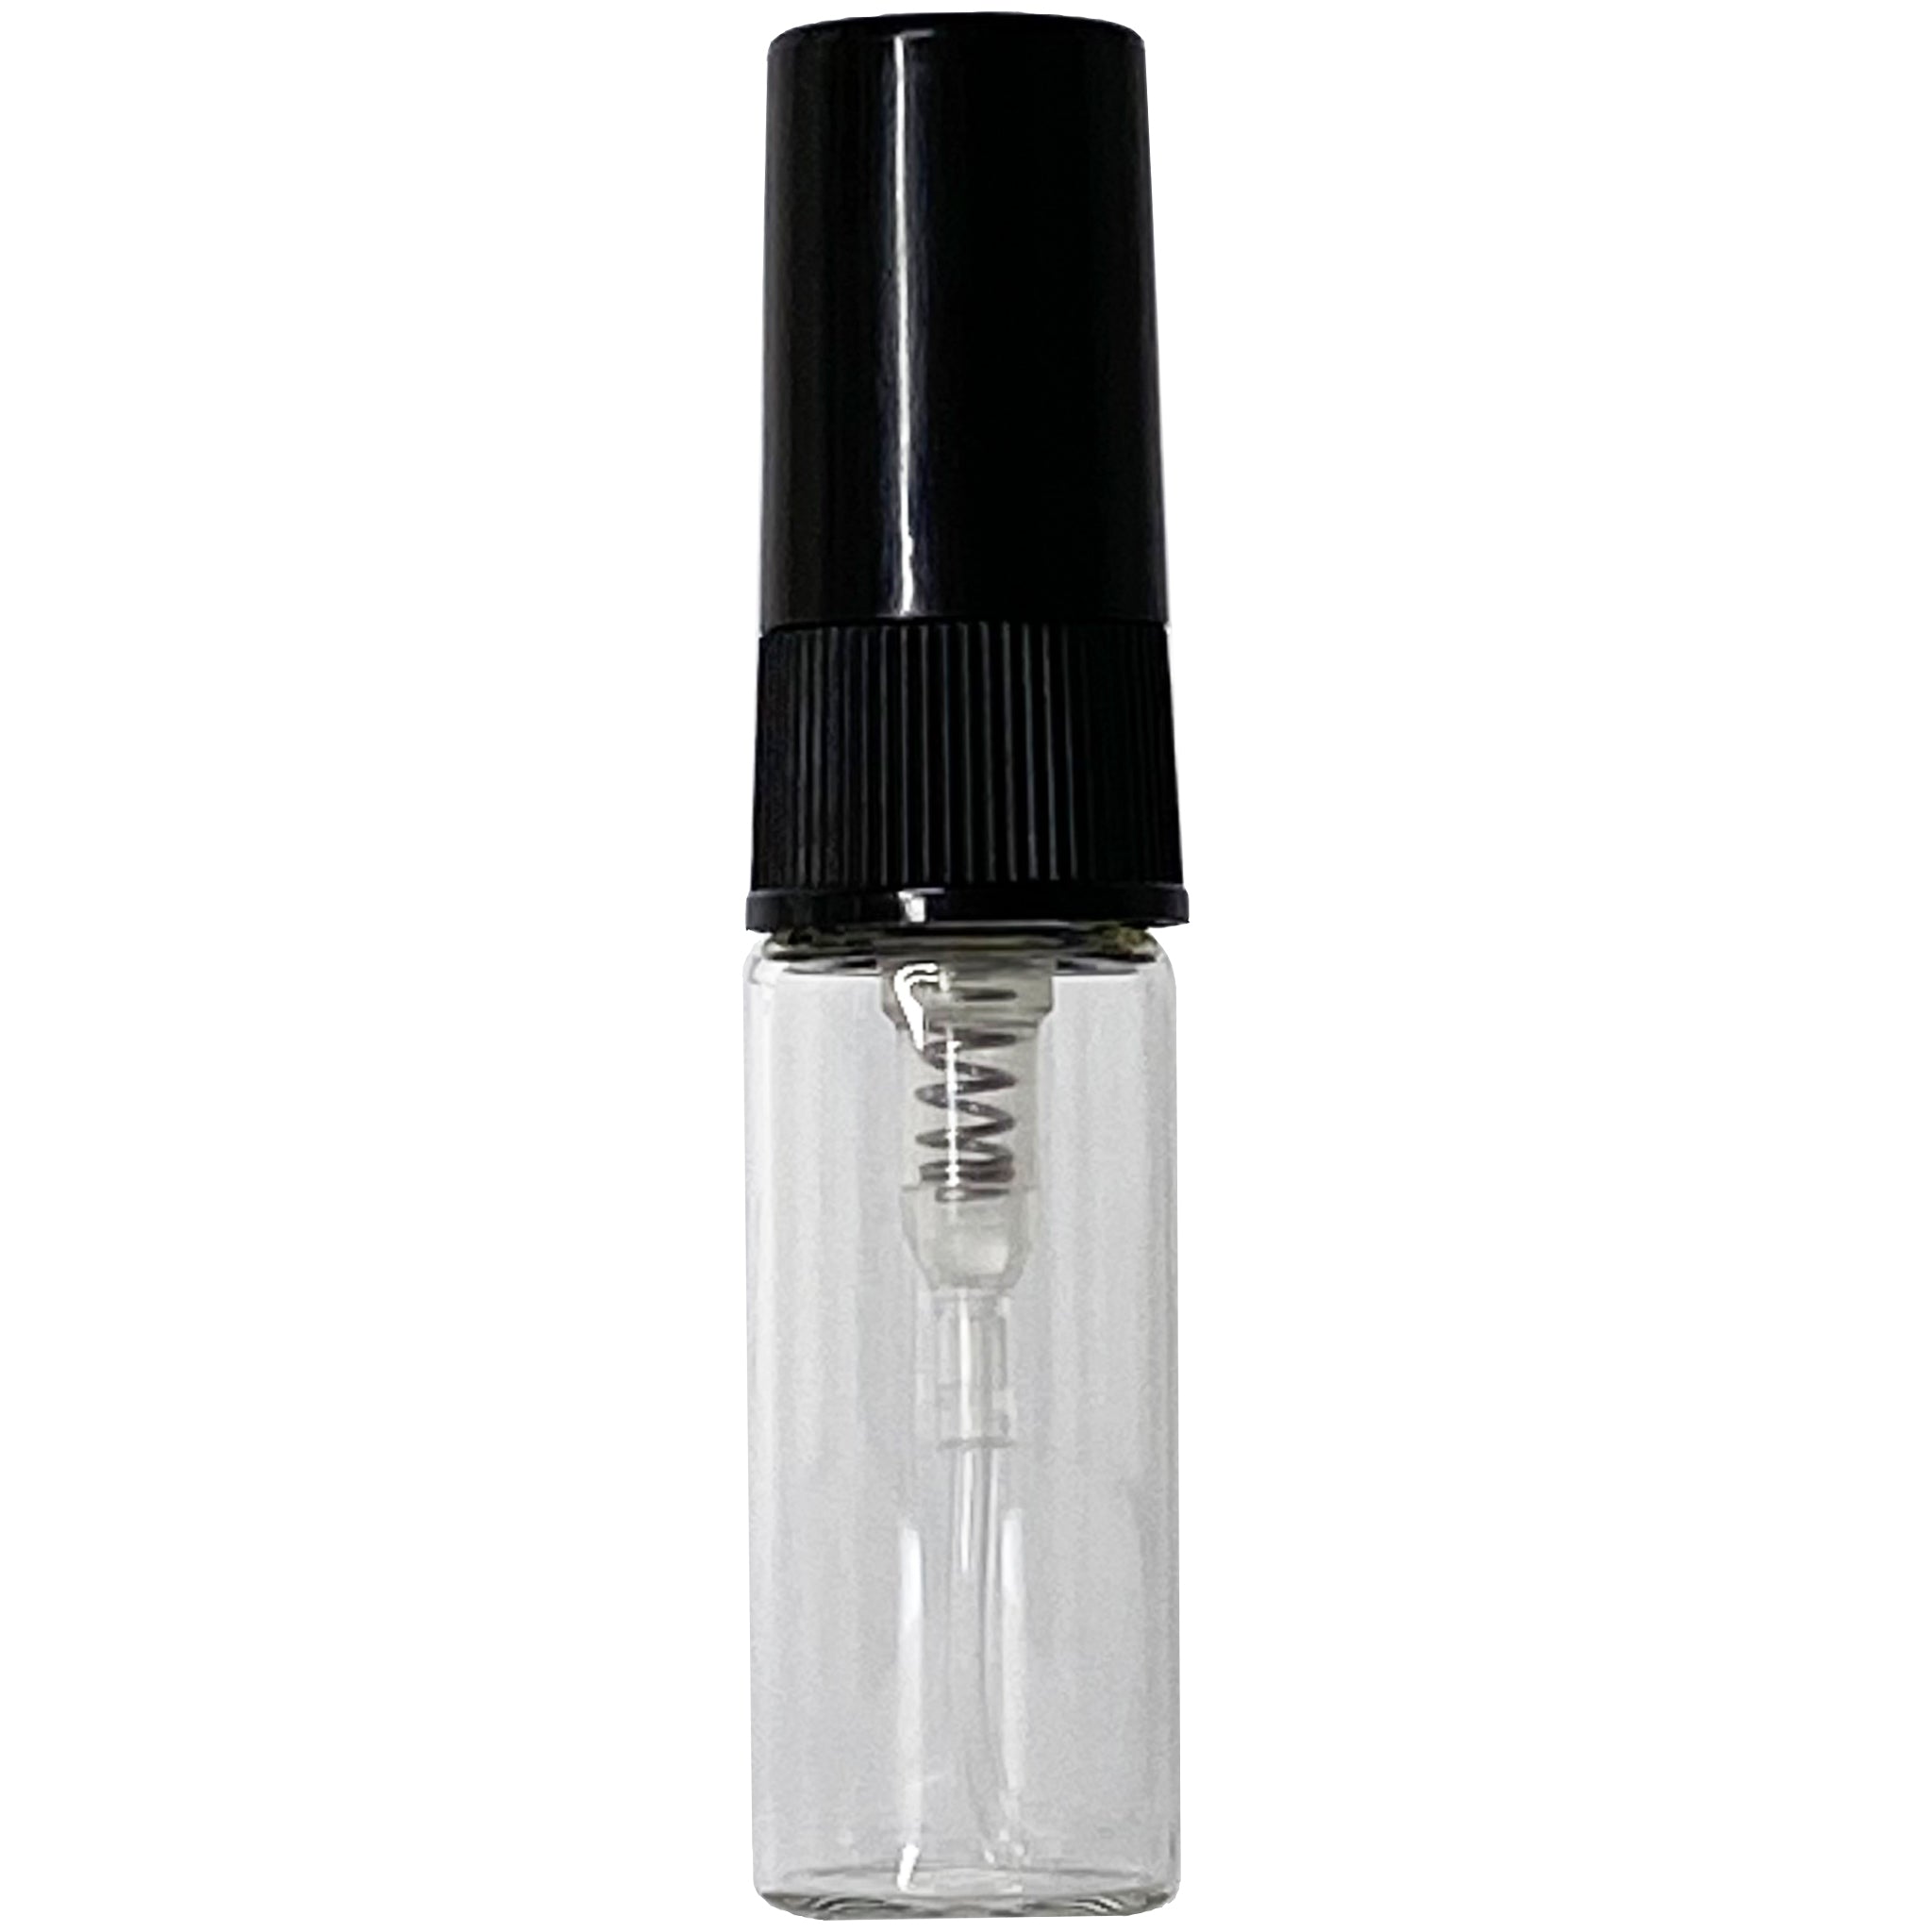 3ml 0.1oz Clear Perfume Glass Spray Bottles Black Atomizers